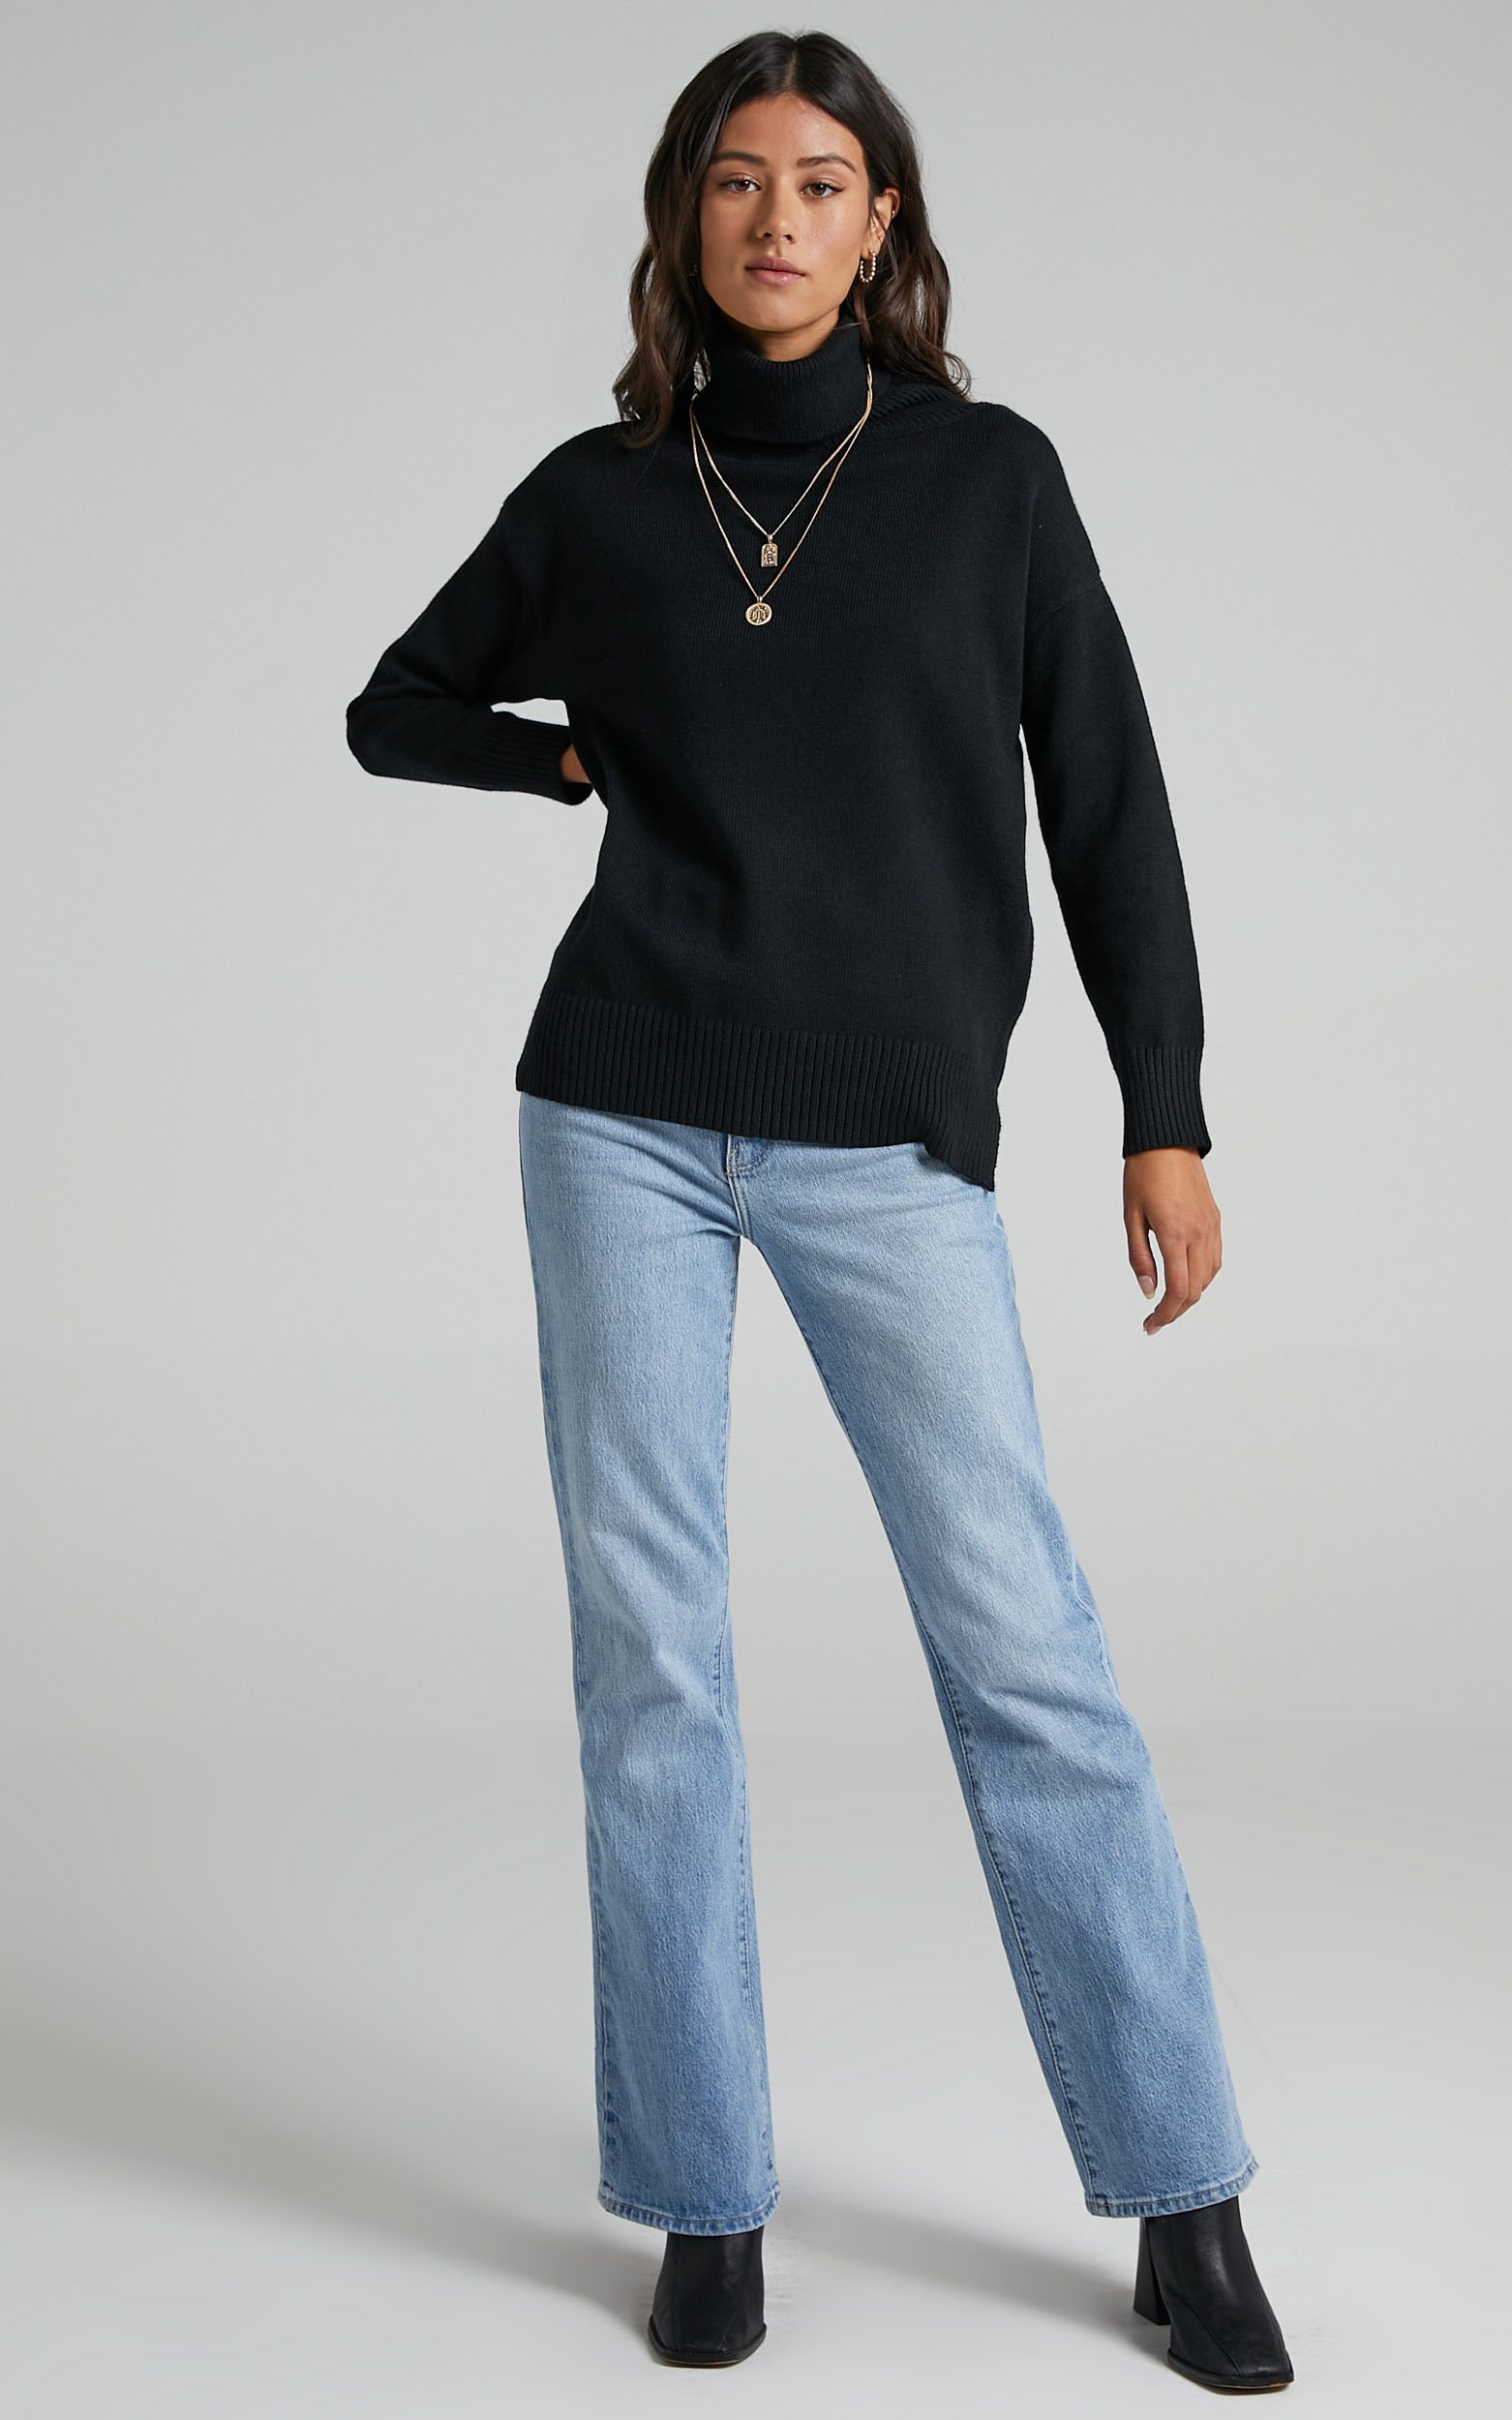 Irvette Knit Jumper in Black | Showpo USA